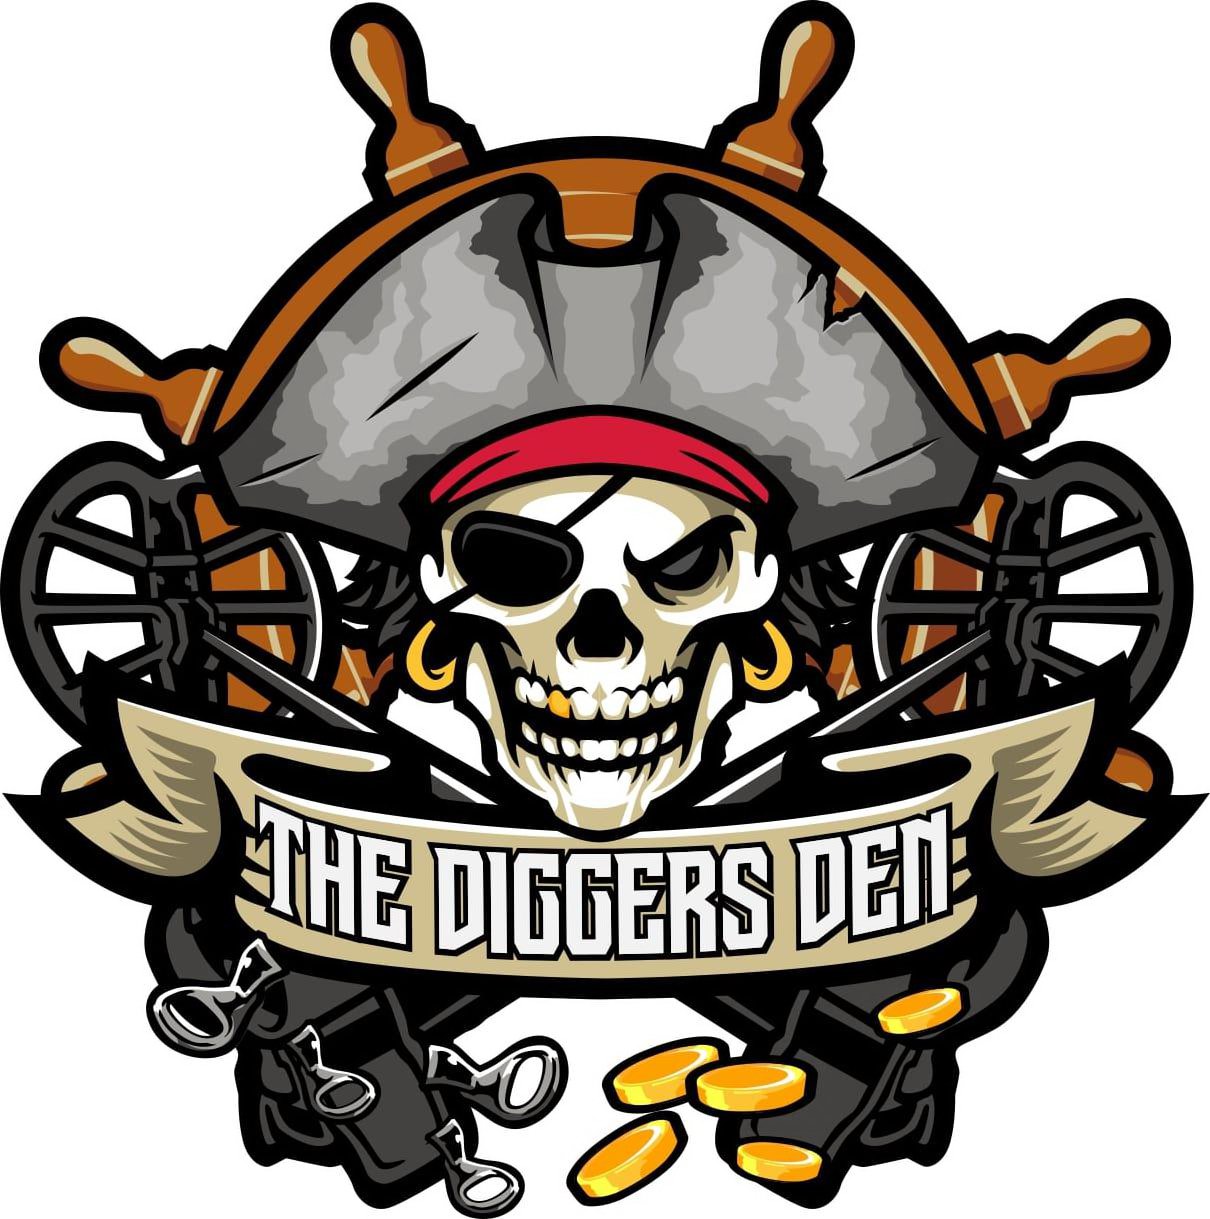  THE DIGGERS DEN